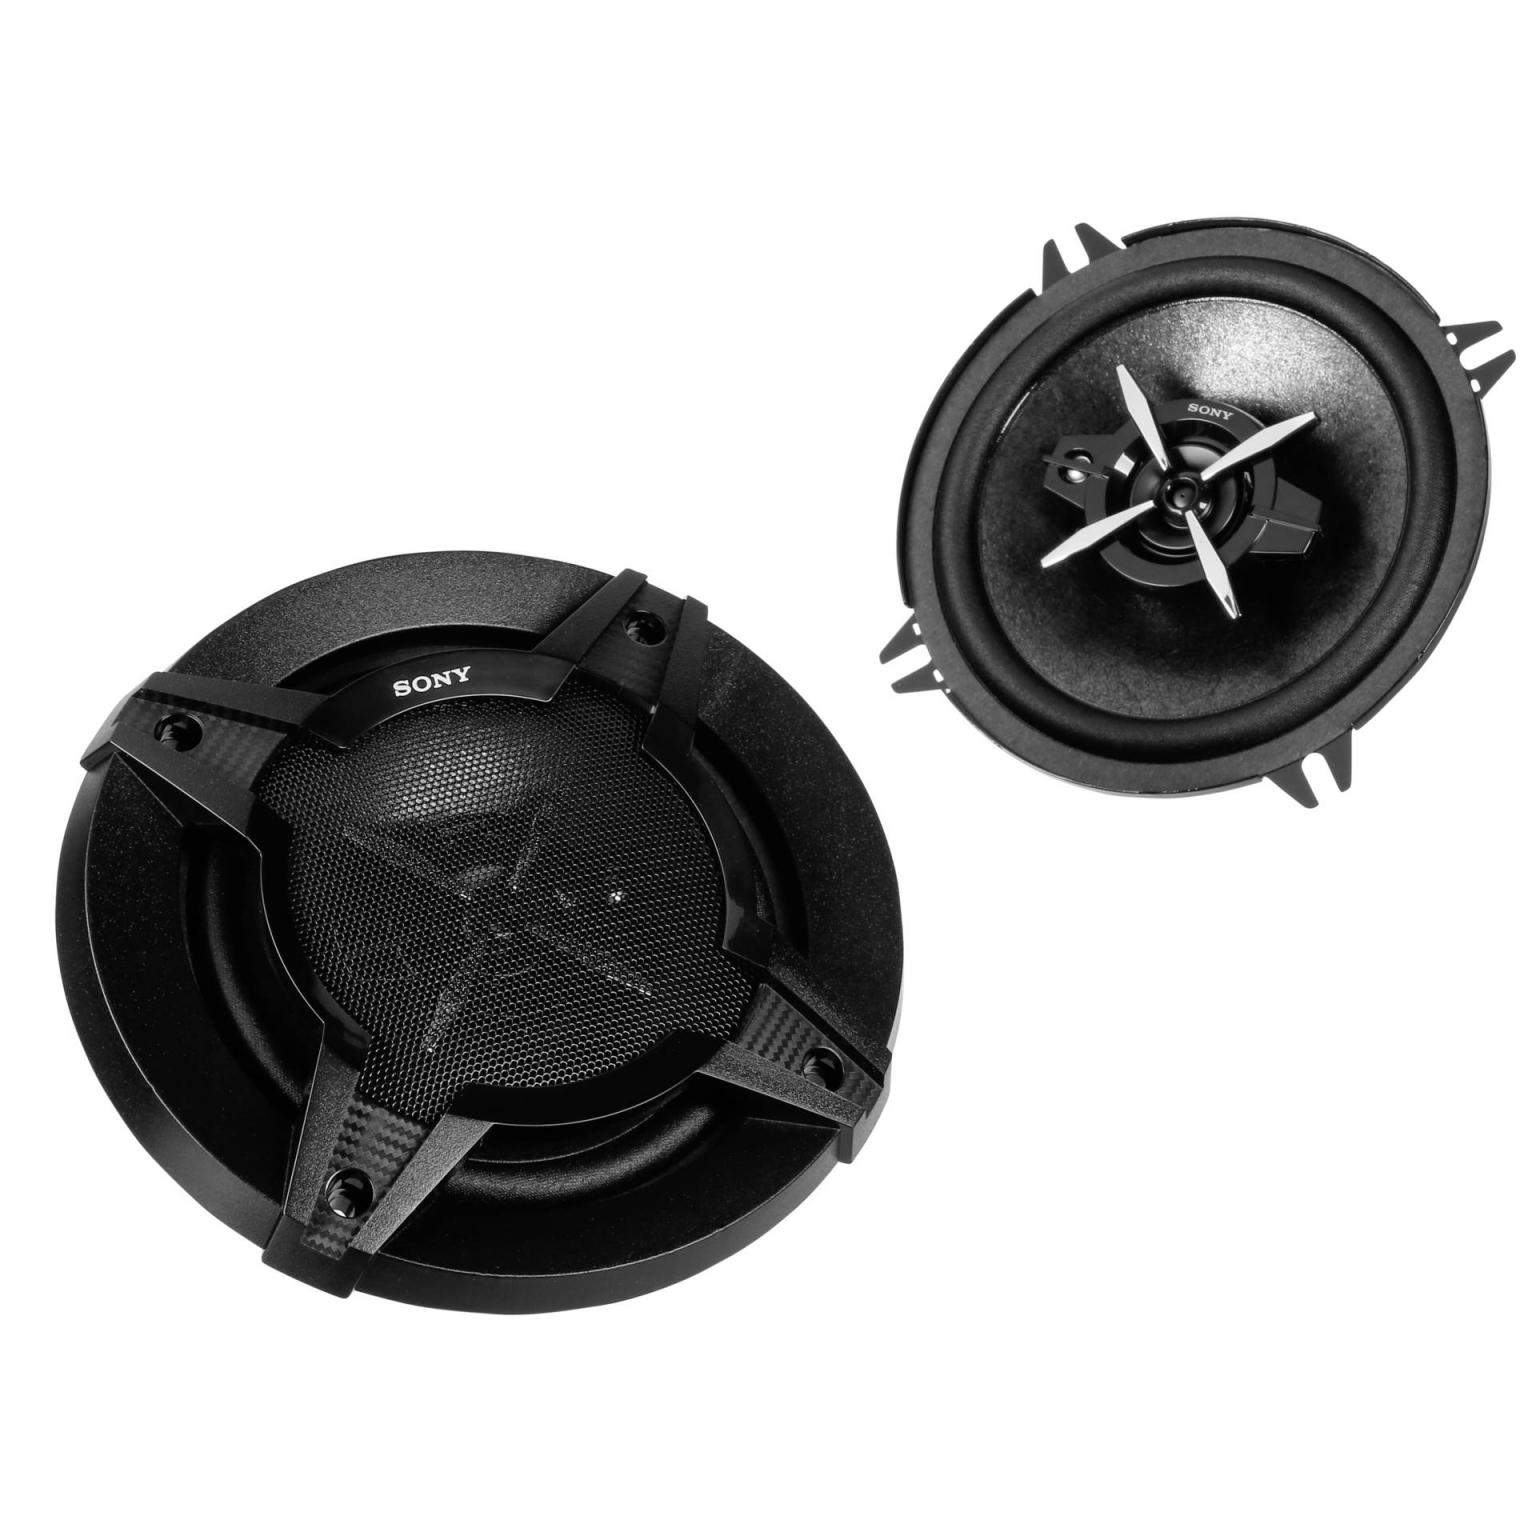 Fullrange speakers - 5 Inch - Sony